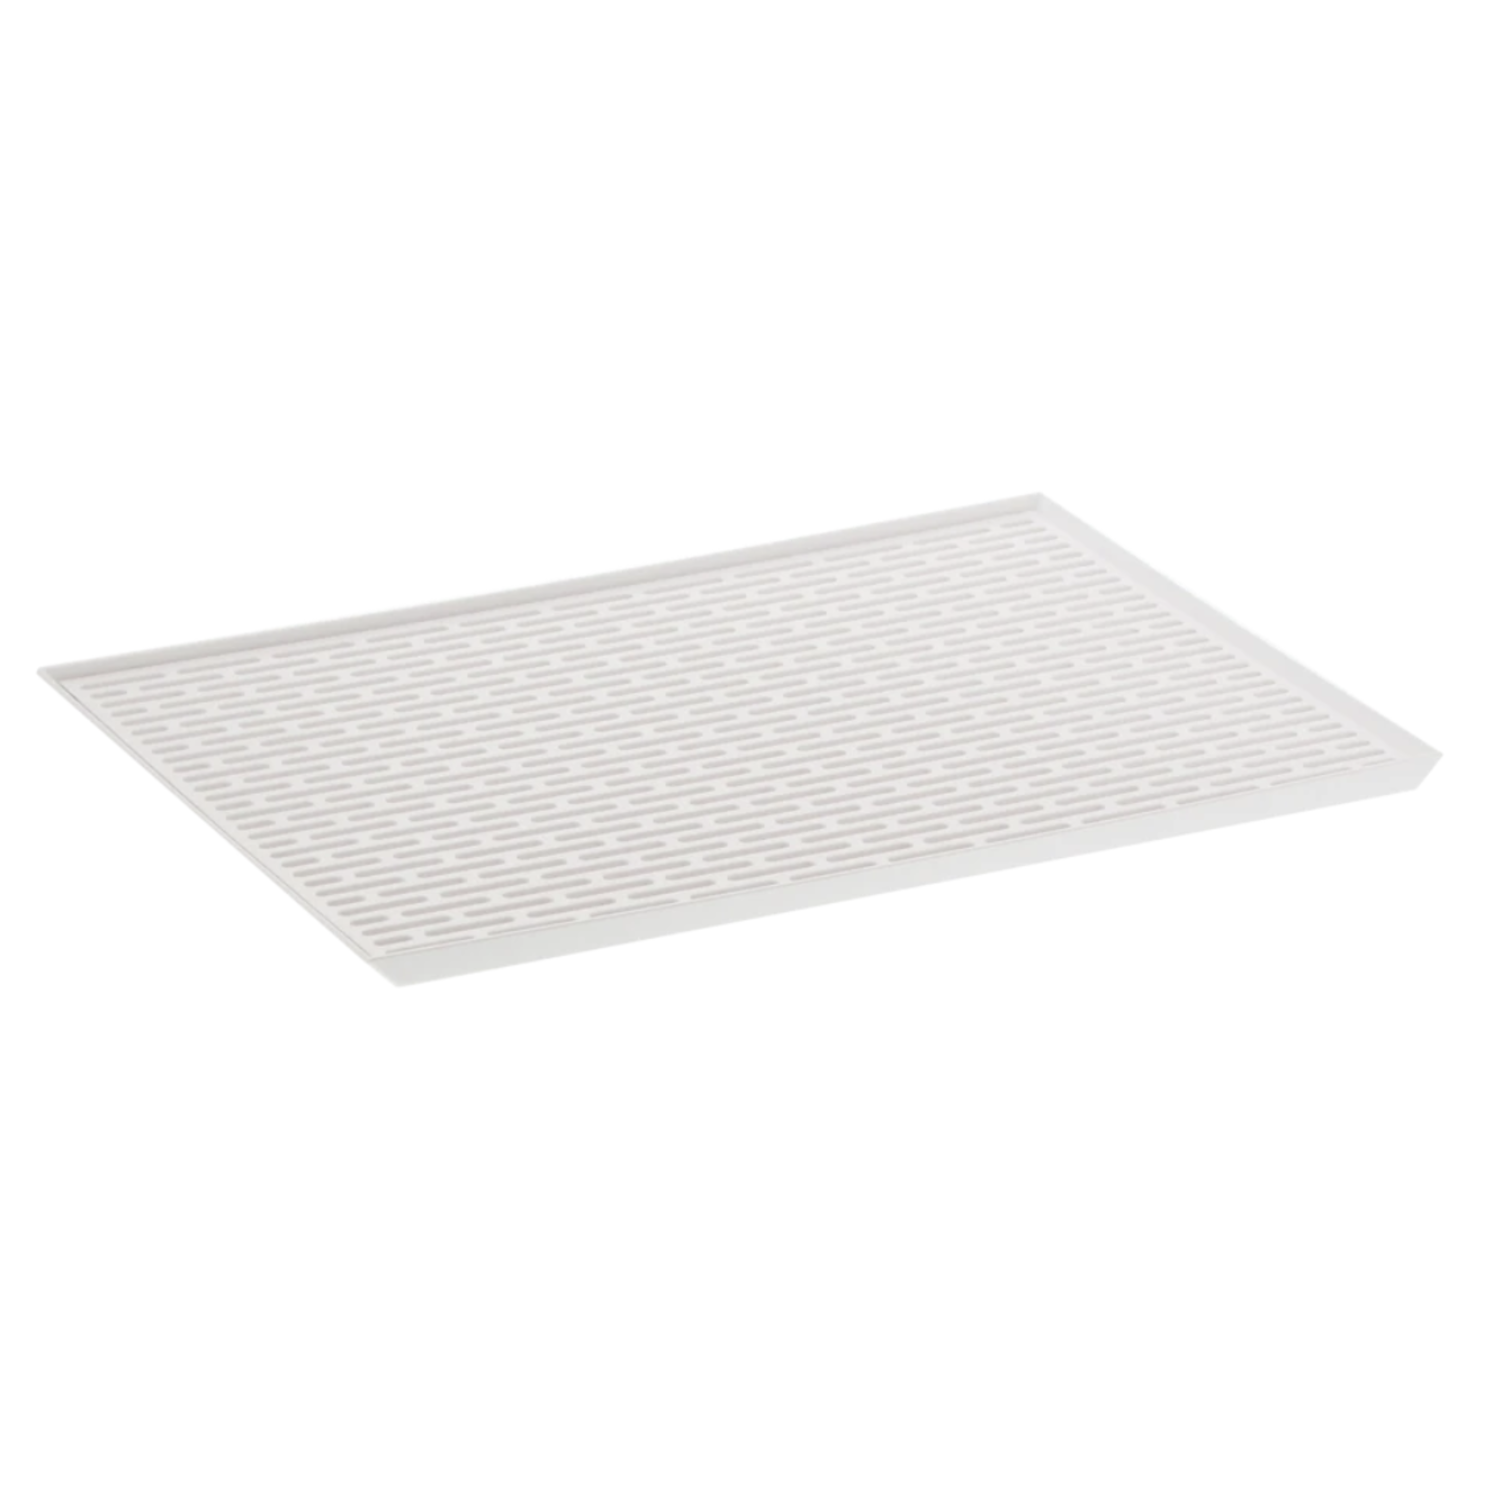 https://cdn.shoplightspeed.com/shops/633447/files/27749008/1500x4000x3/yamazaki-large-white-silicone-dish-drying-mat.jpg